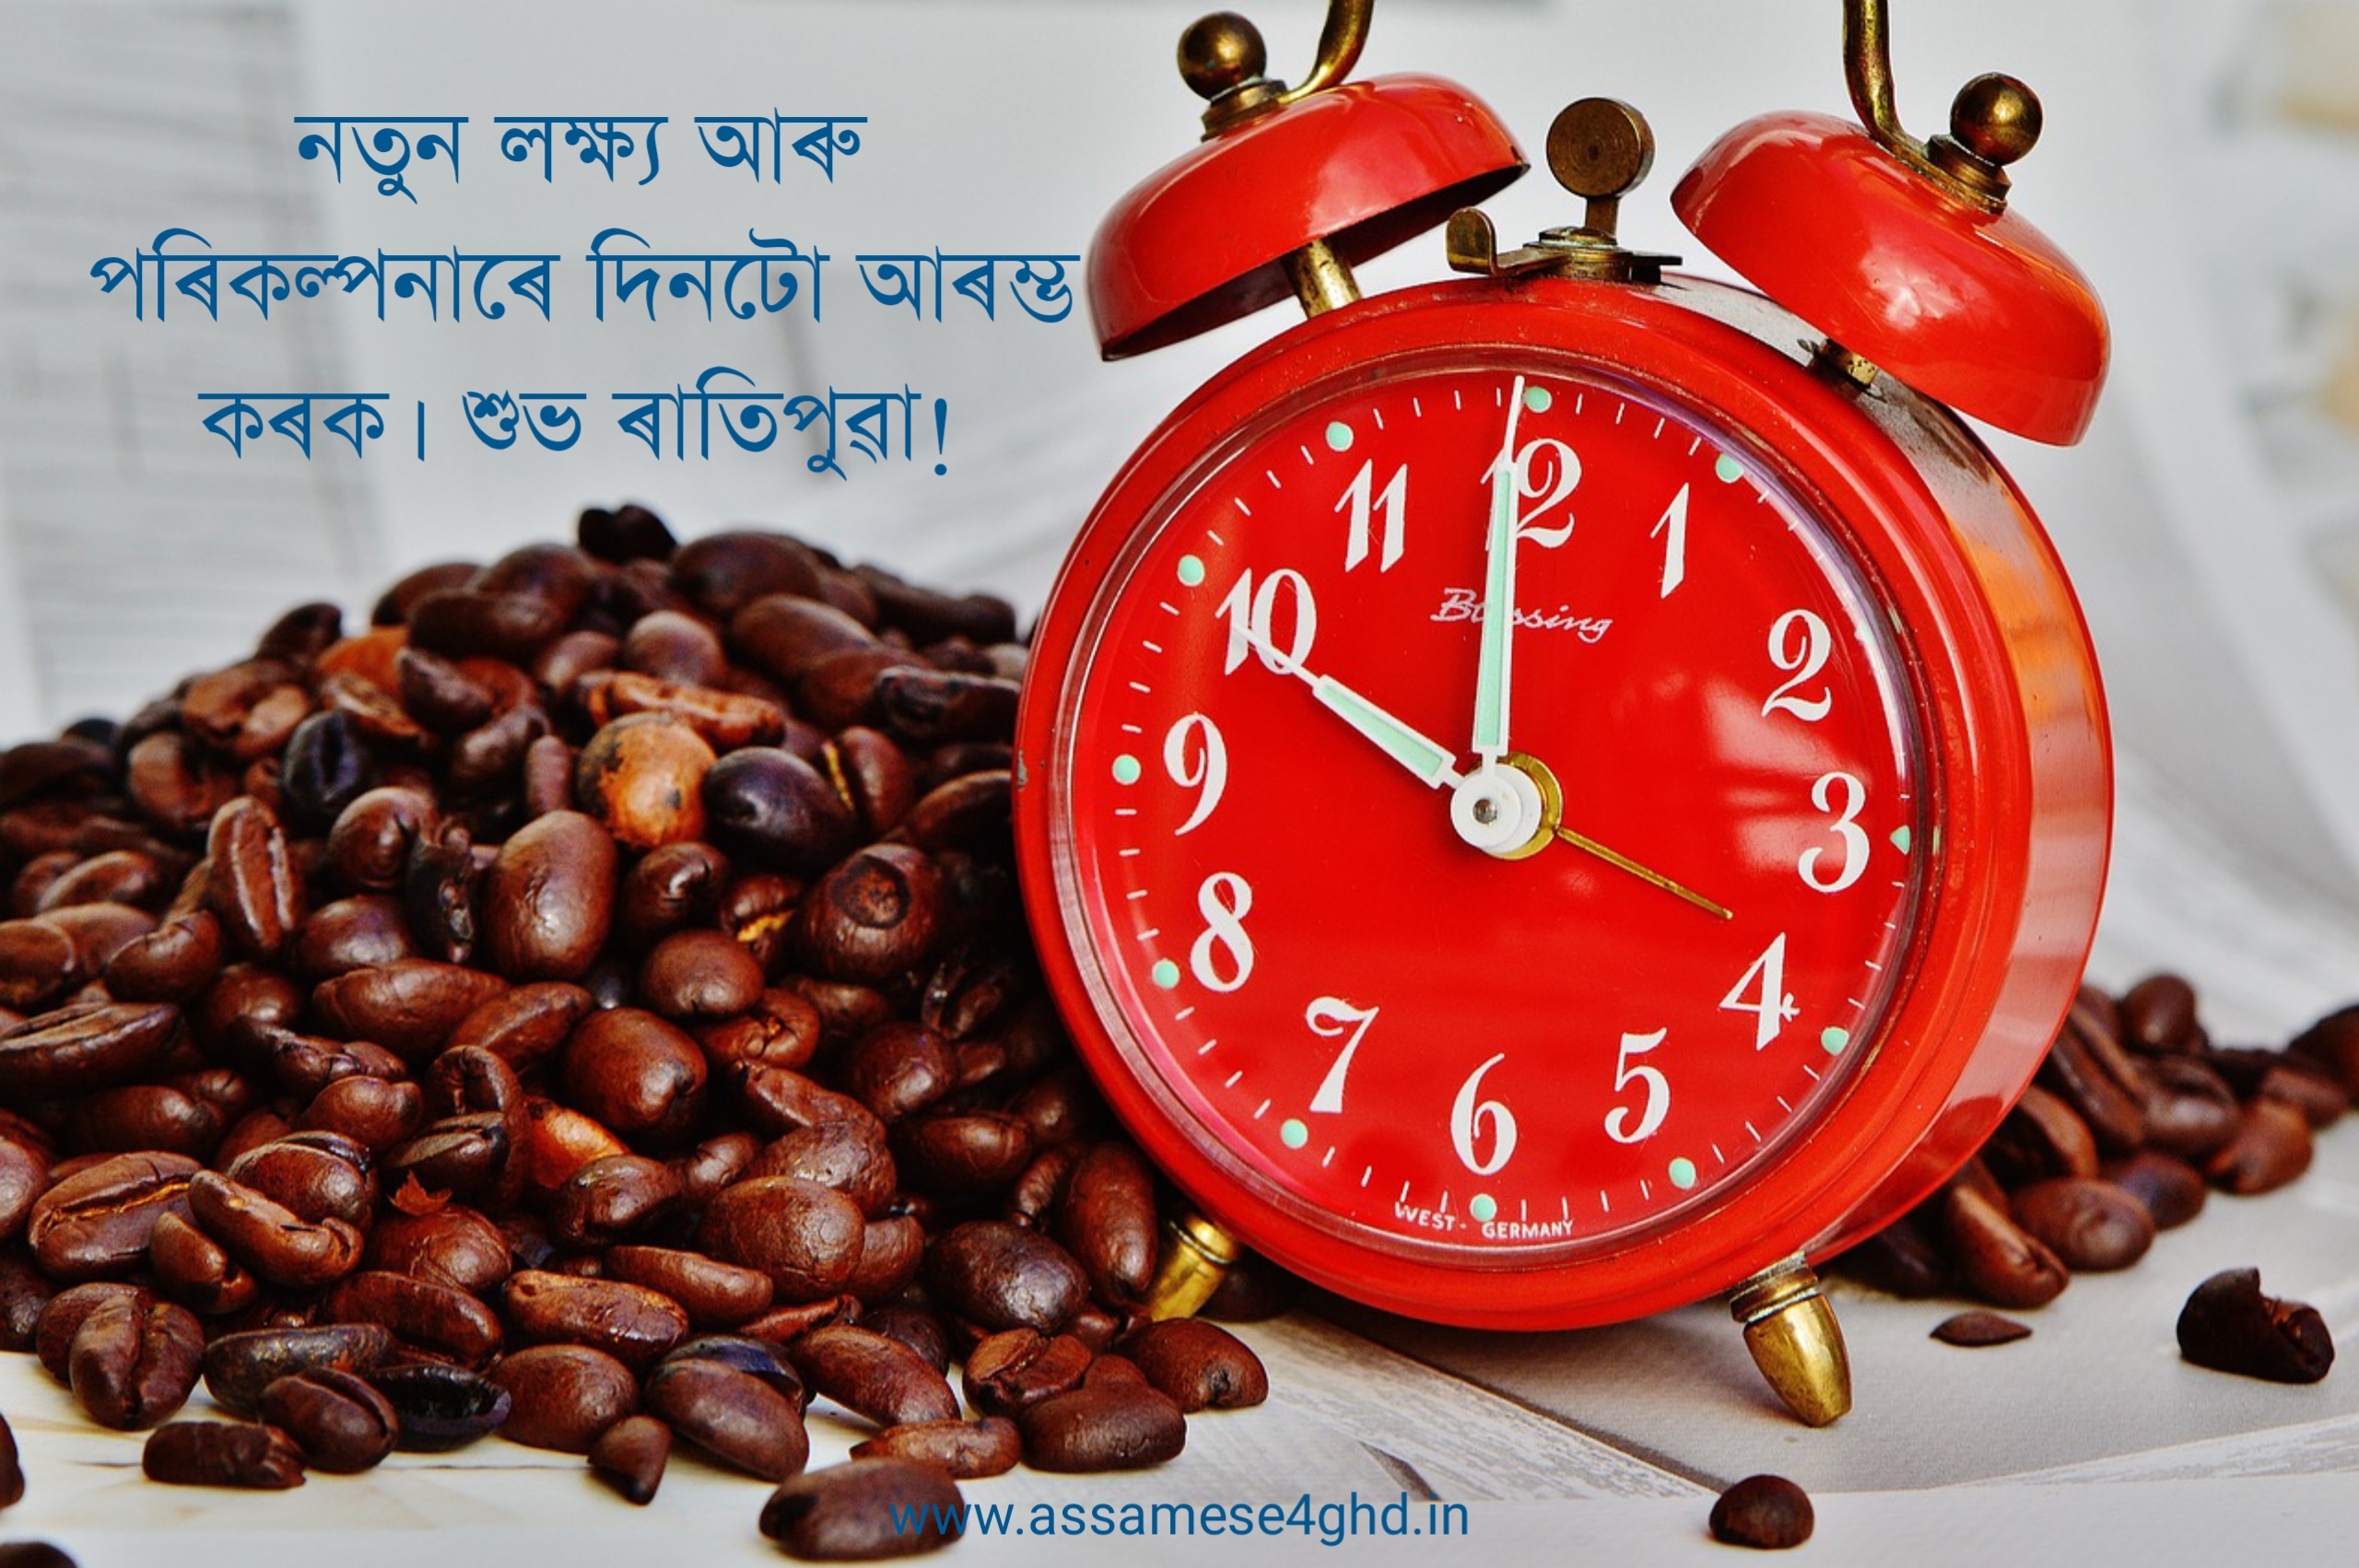 Morning Assamese Pic